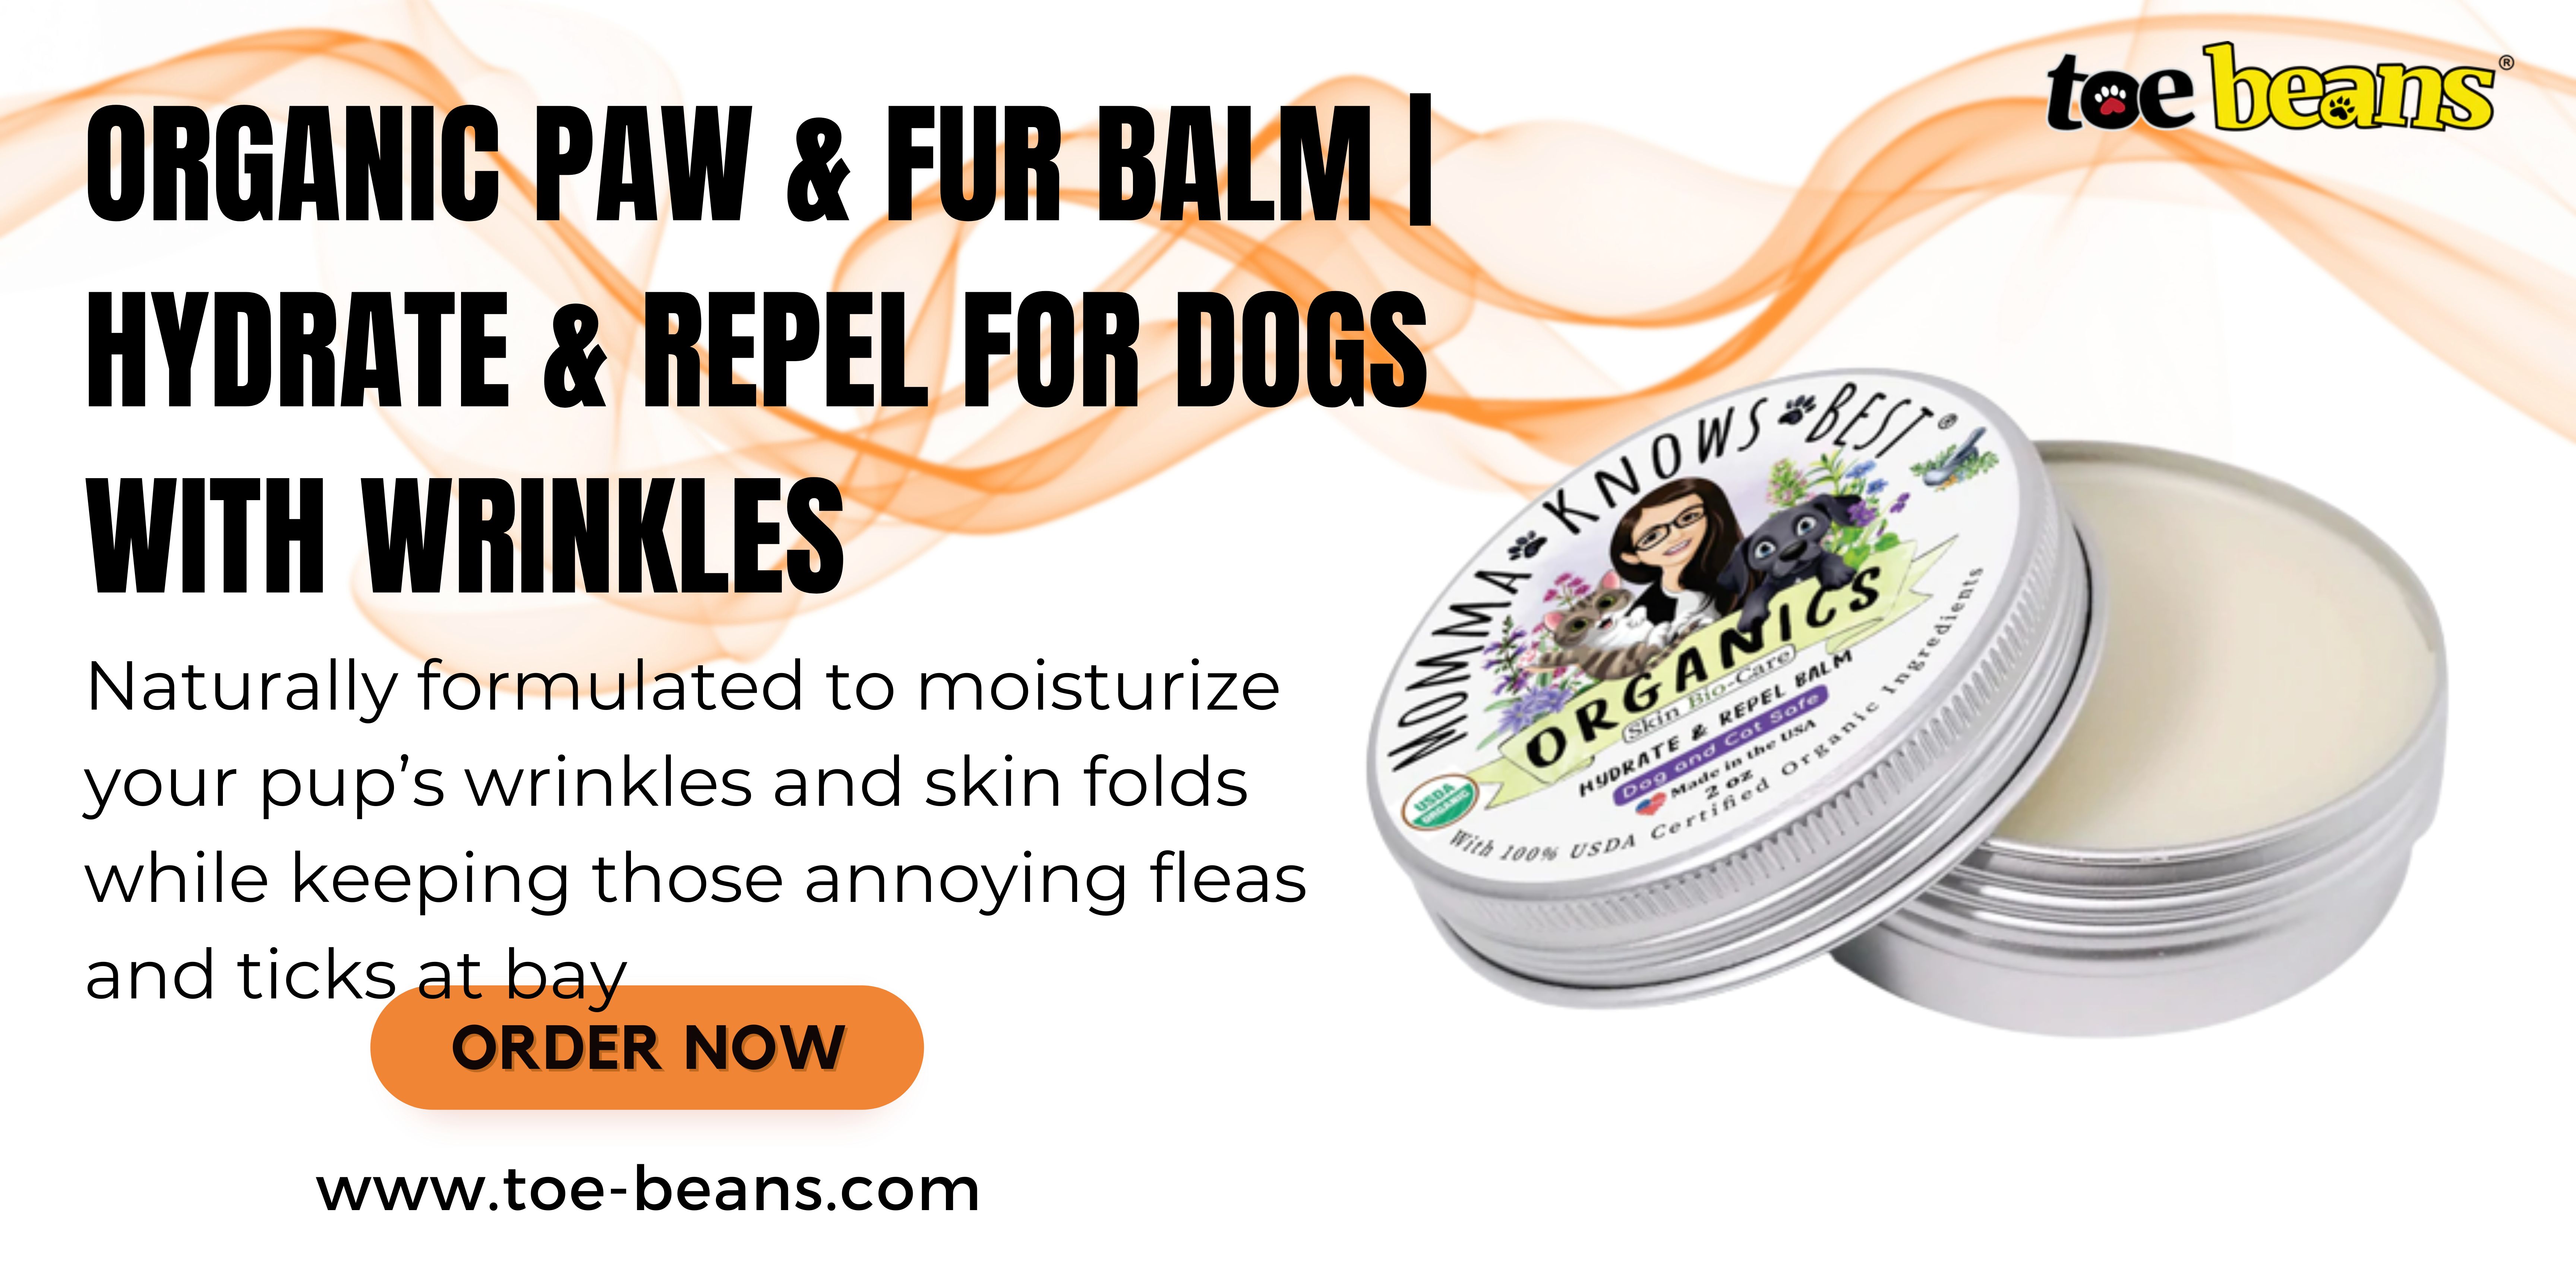 Toe Beans - McLean, VA, US, dog supplies online